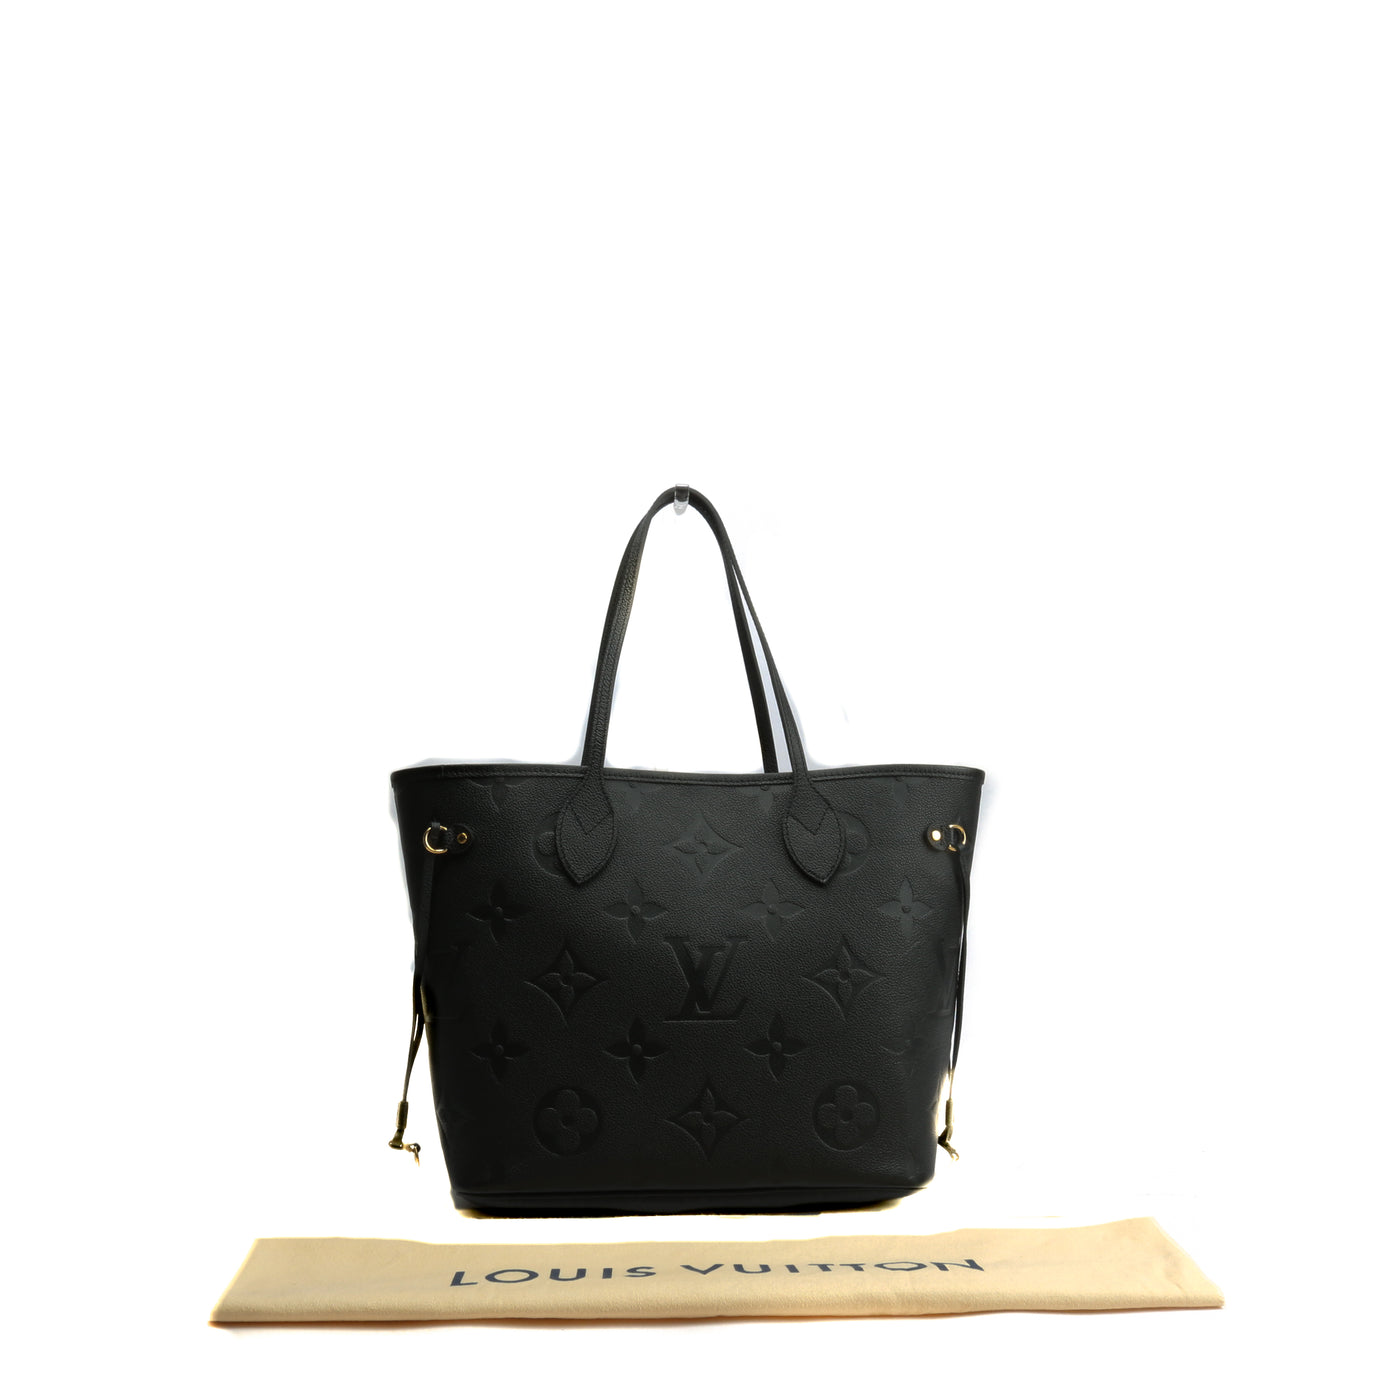 Louis Vuitton - Neverfull MM - Black Empreinte - Mint Condition